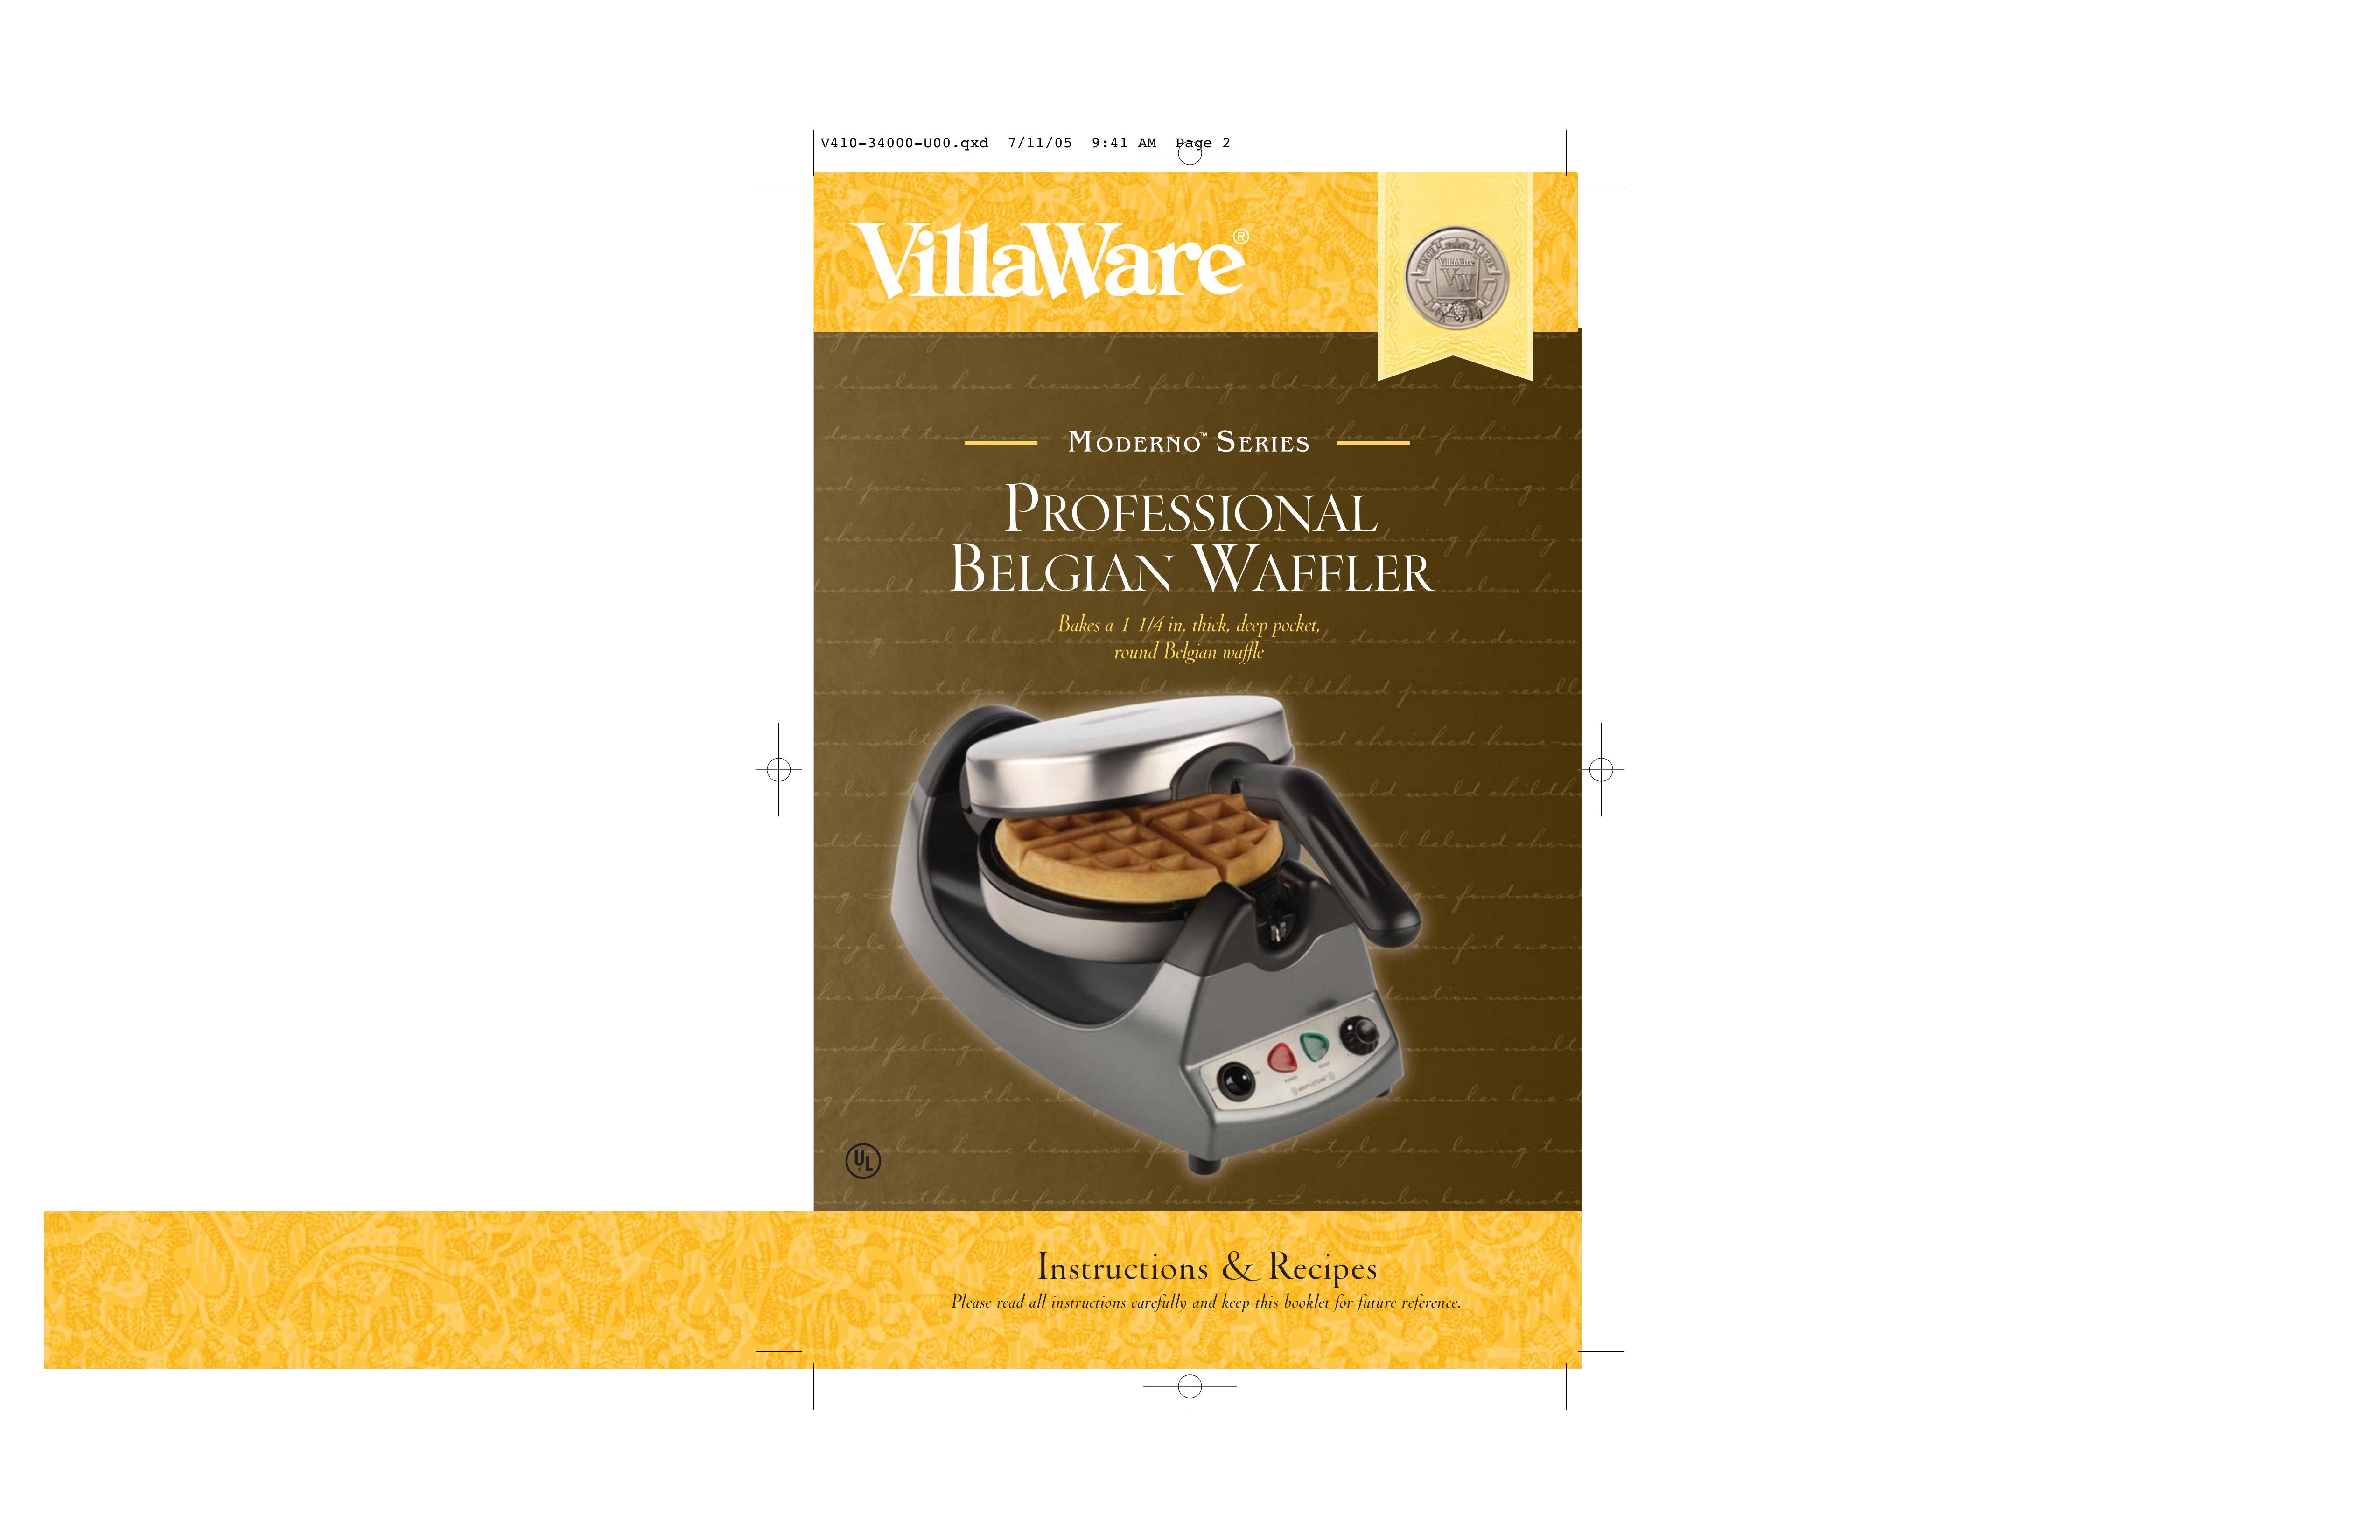 Villaware BELGIAN WAFFLER Waffle Iron User Manual